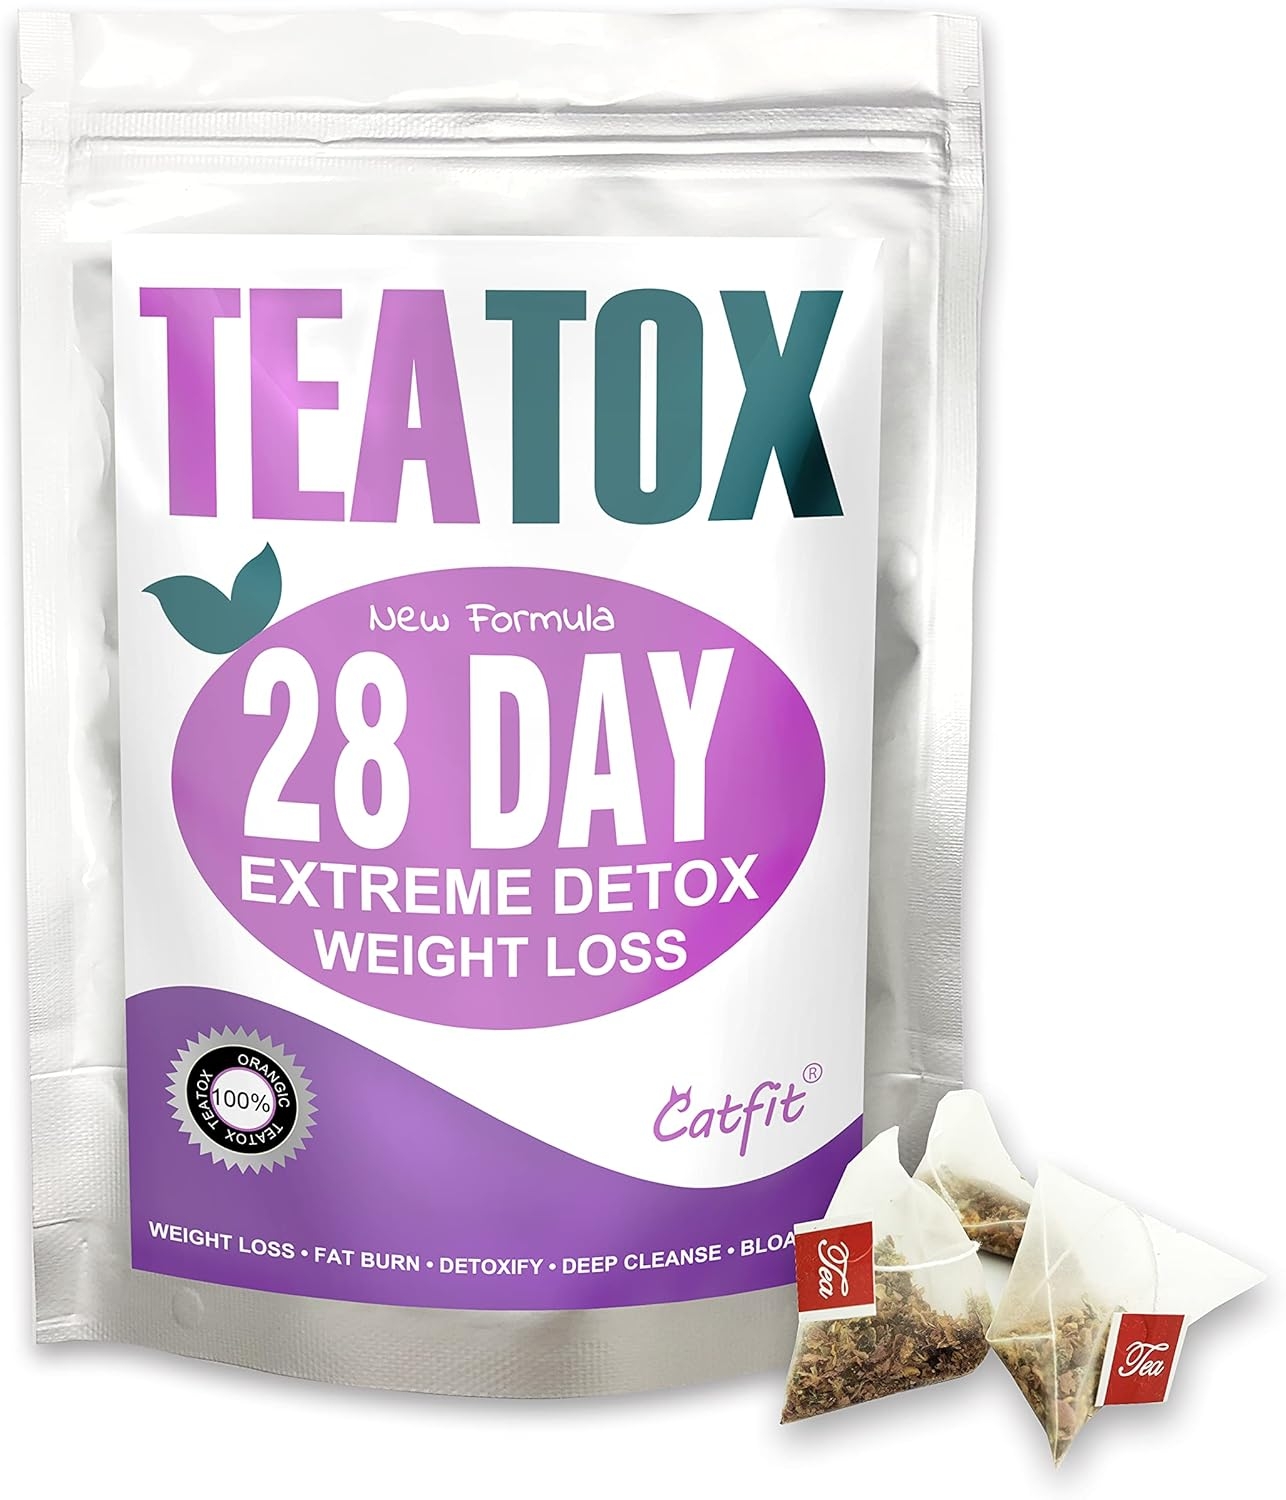 Catfit Detox Tea Herbal Tea Teatox , 28 Days Weight Loss Diet Tea for Cleanse